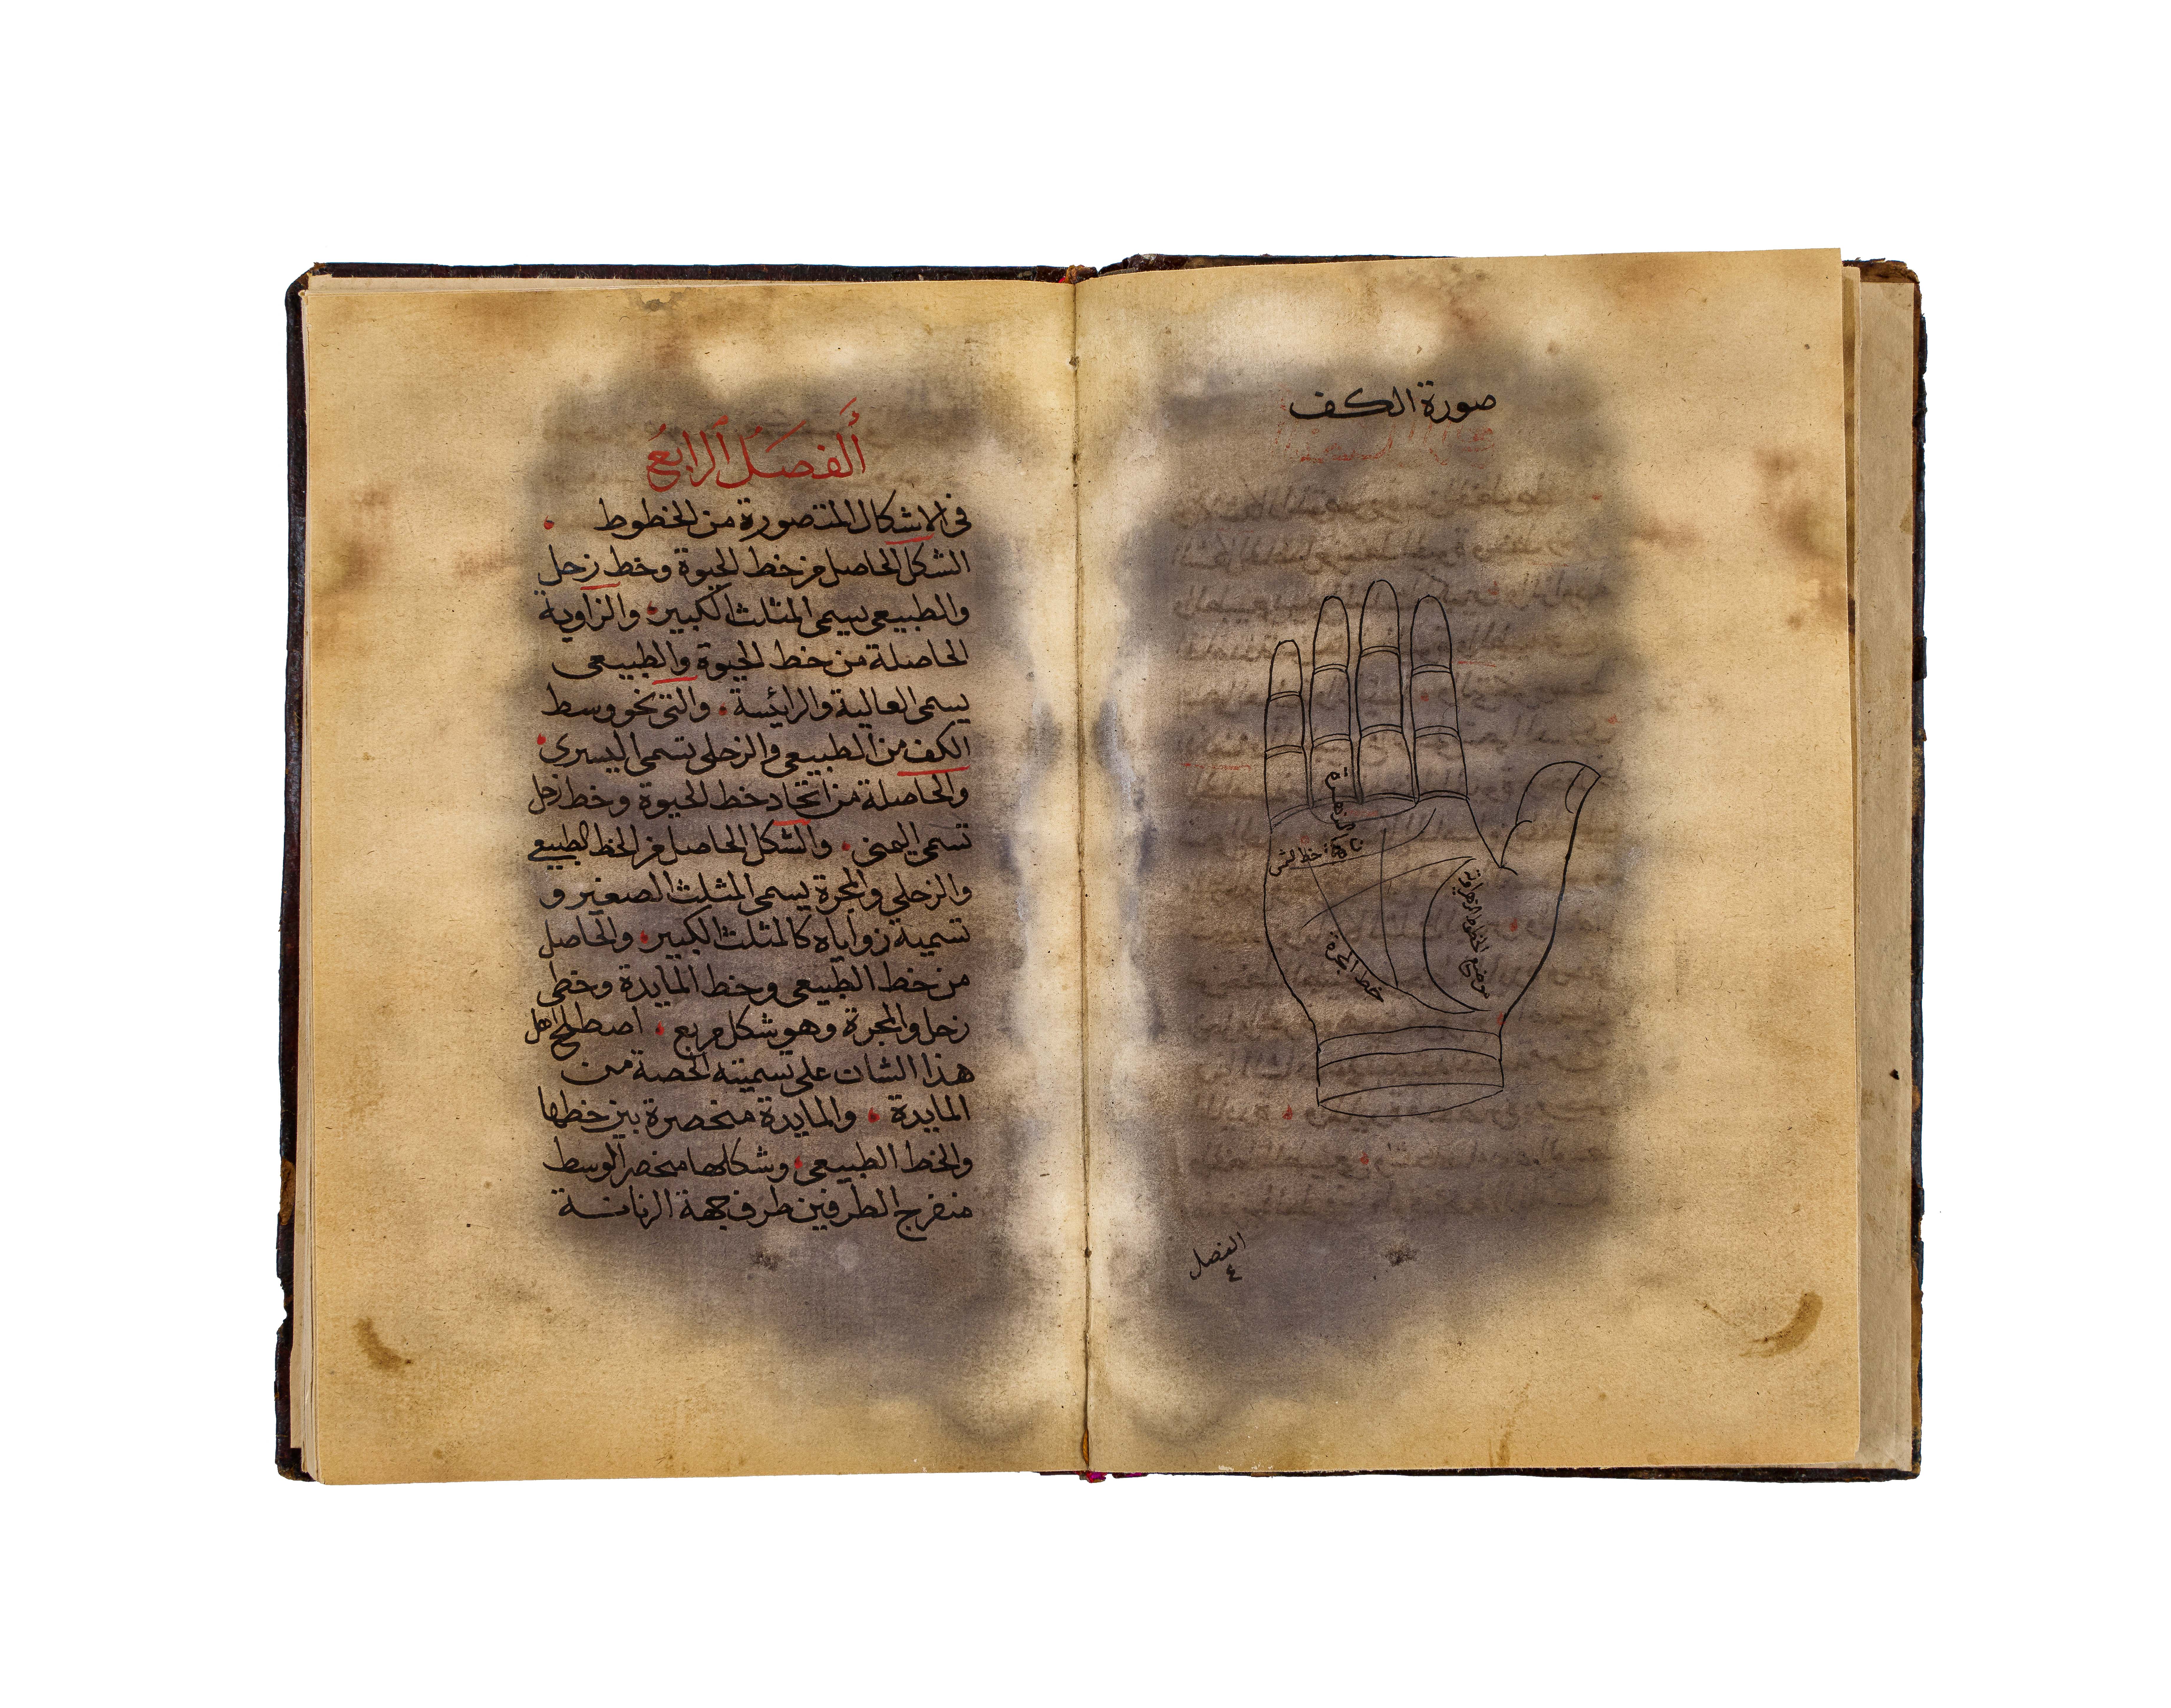 TUHFAT ALALIF FI ELIM QIRA'AT ALKAFI (BOOK OF HIDDEN SCIENCES) COMPILED BY AL-HAKIM AHMAD IBN ALI IB